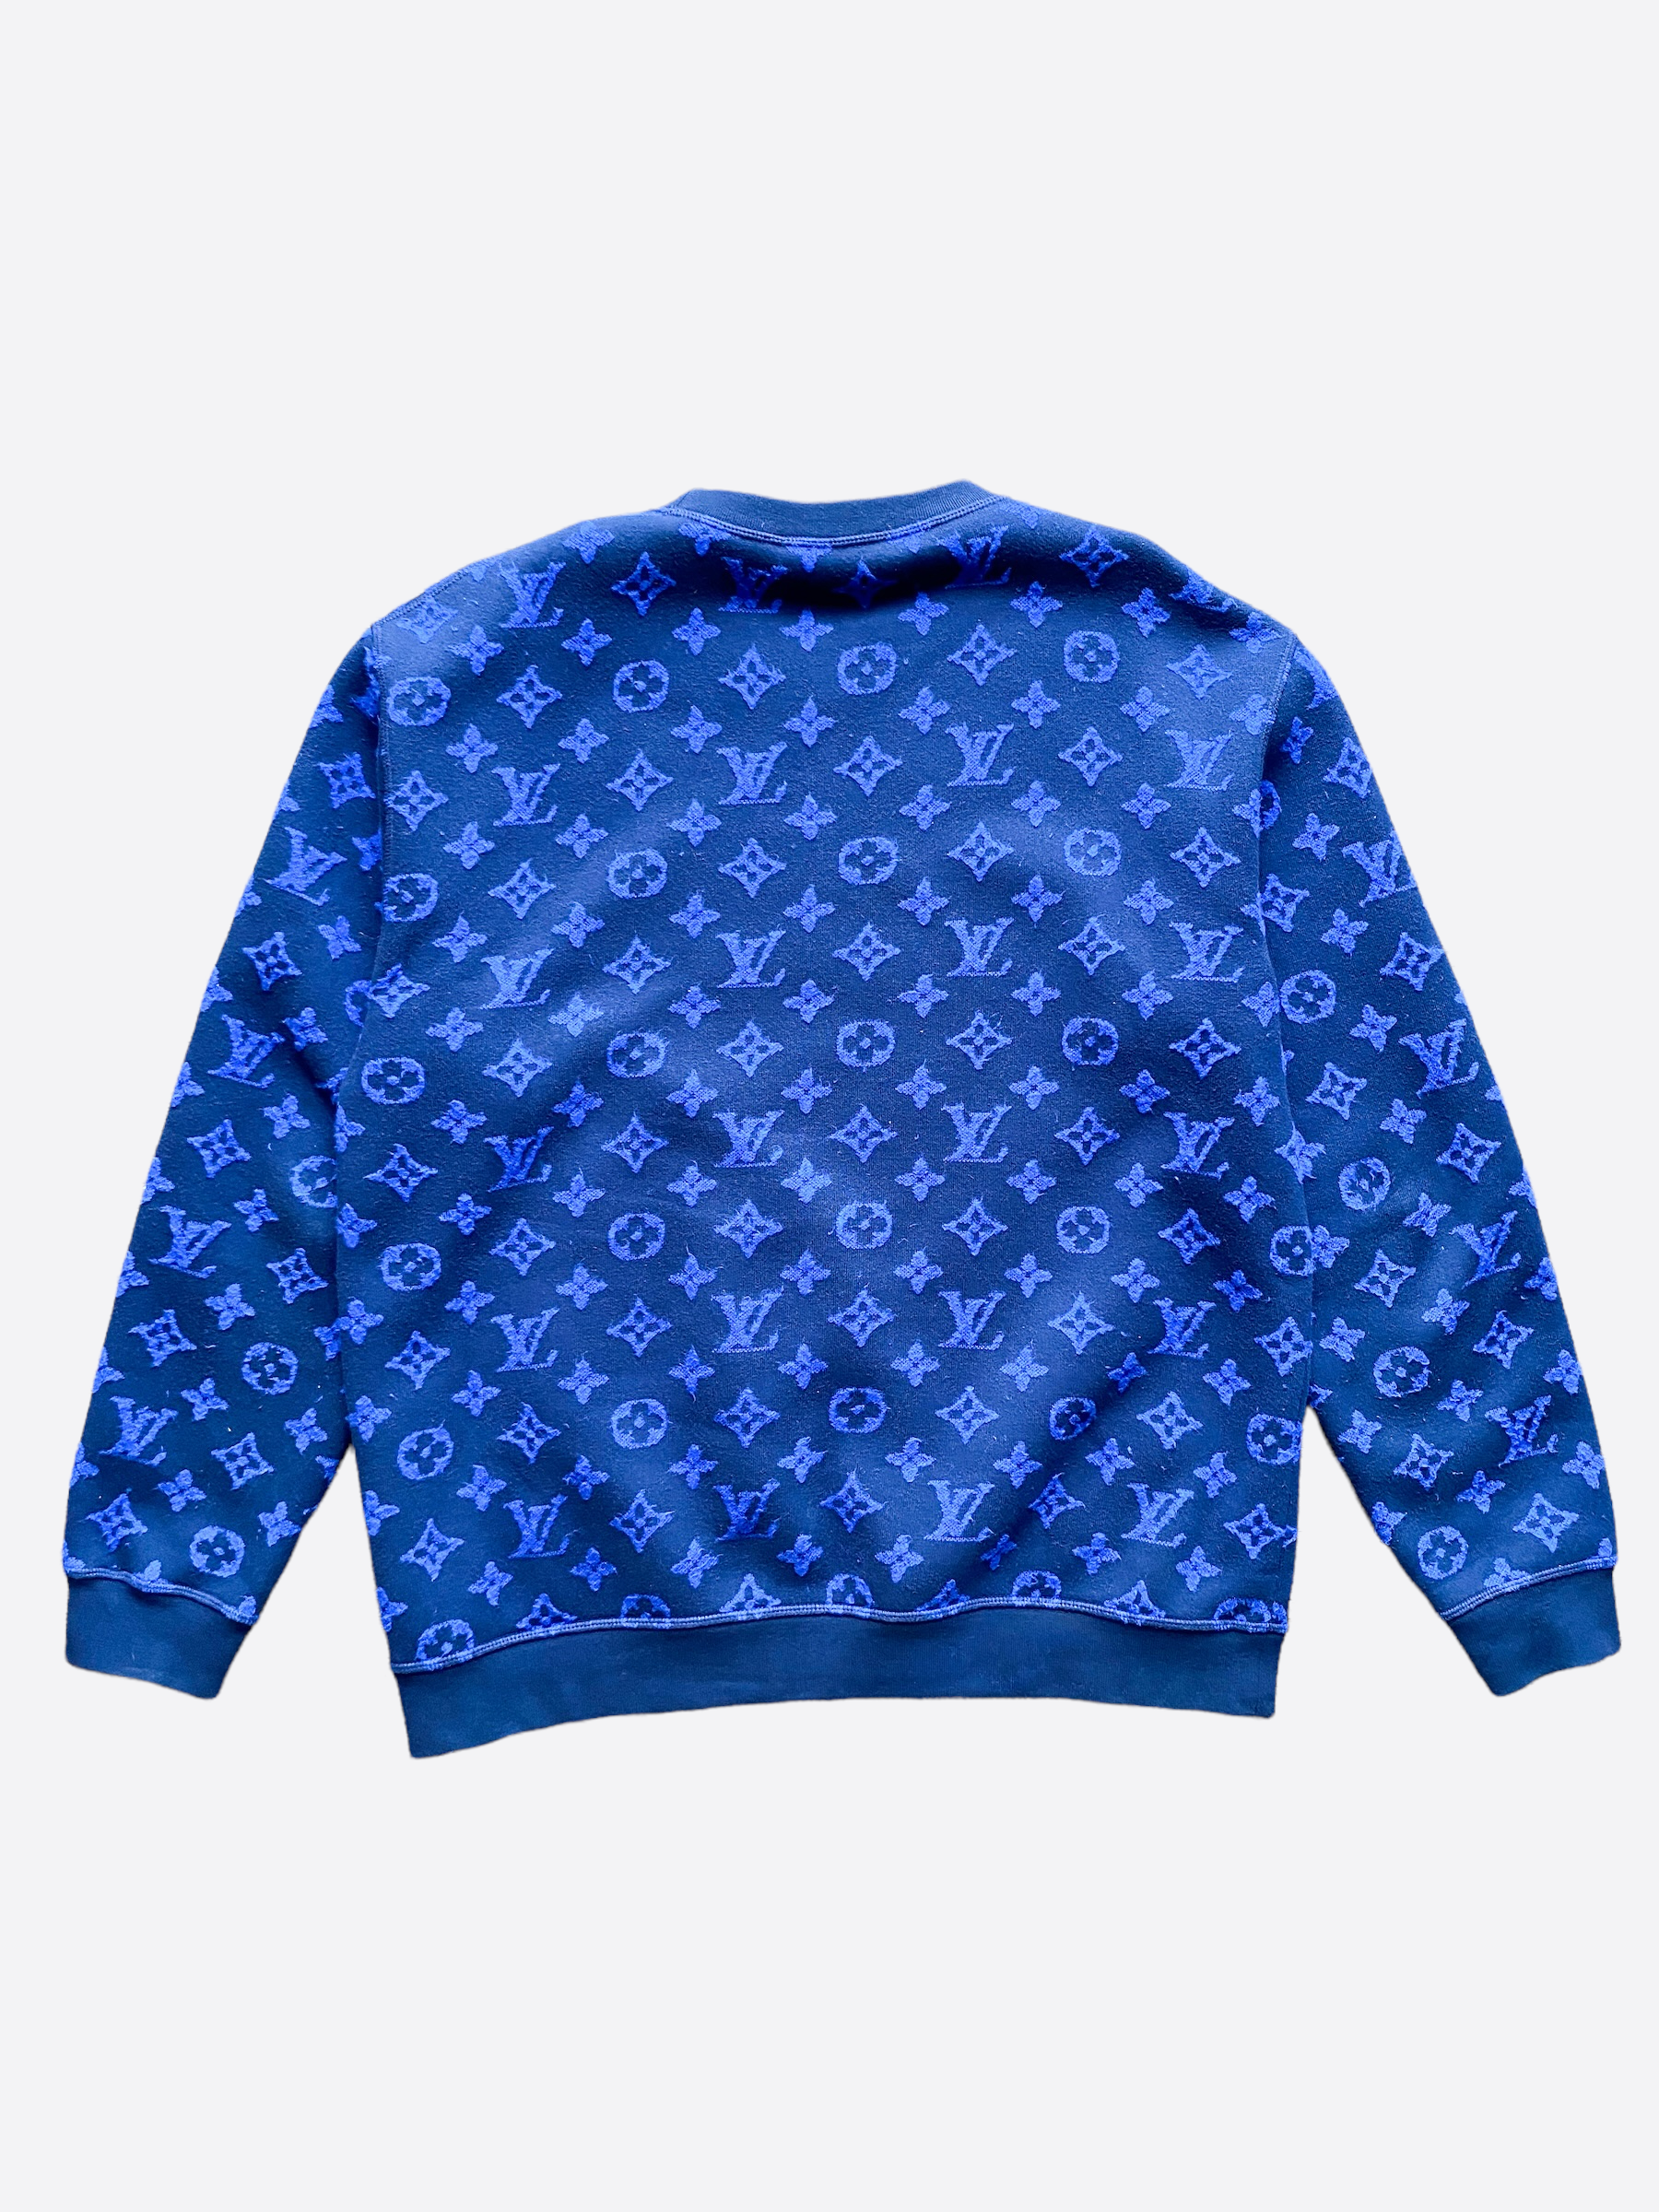 Louis Vuitton 2020 Monogram Jacquard Sweatshirt - Blue Sweatshirts